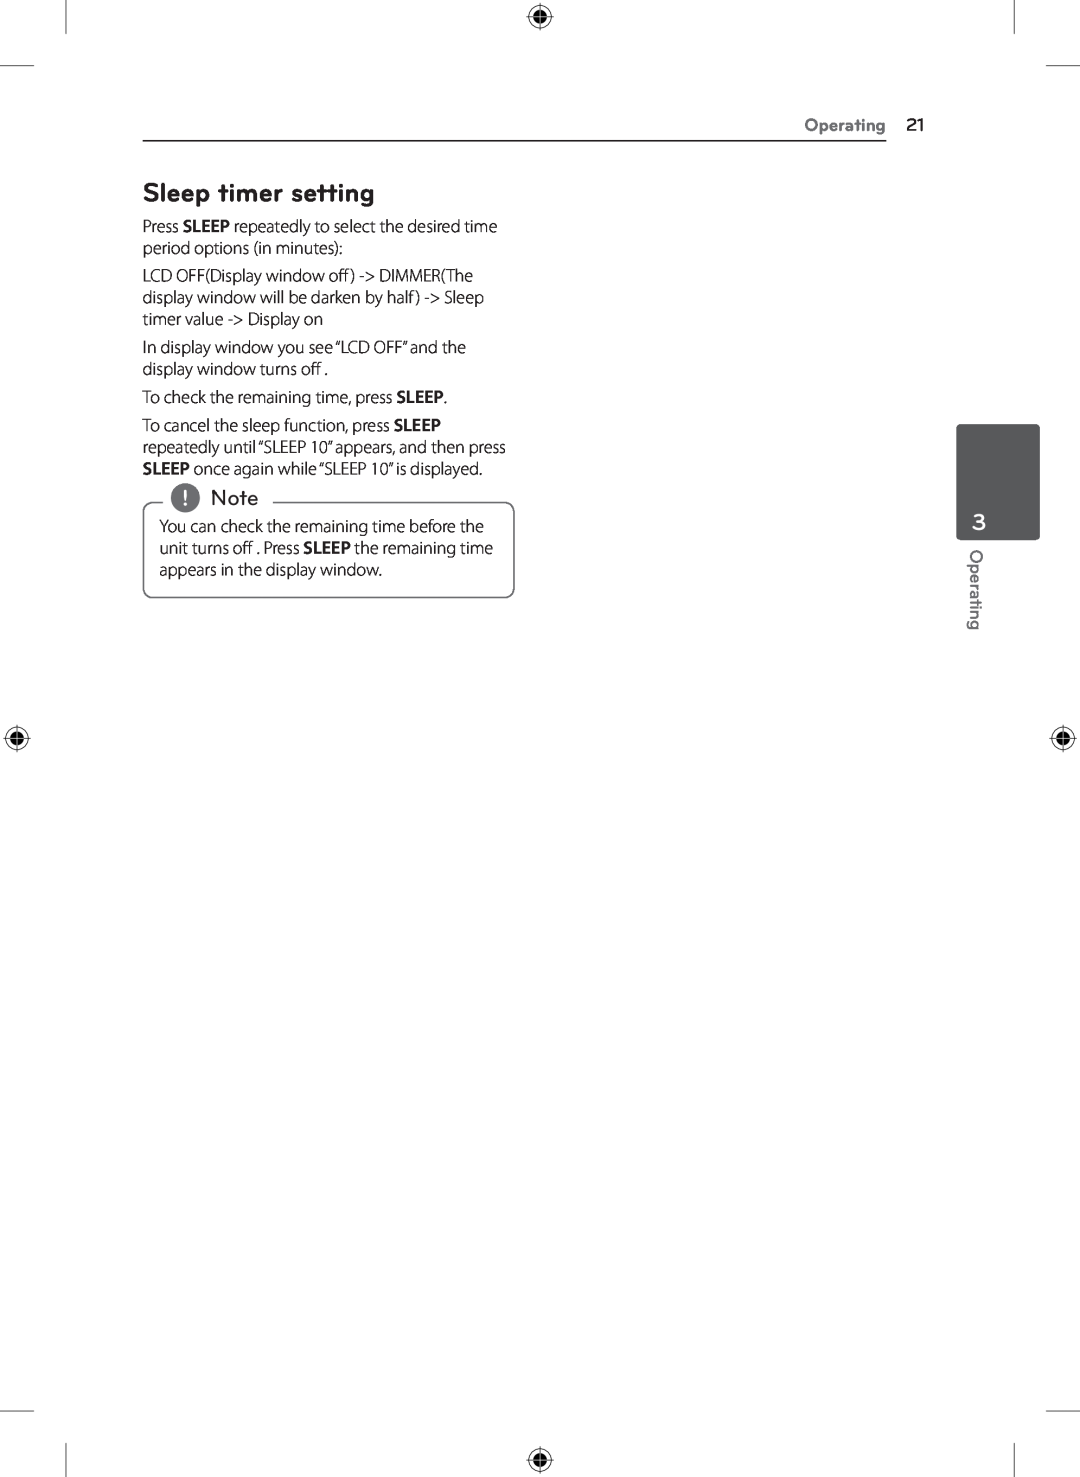 LG Electronics NB4530A, S43A1-D owner manual Sleep timer setting, Operating 